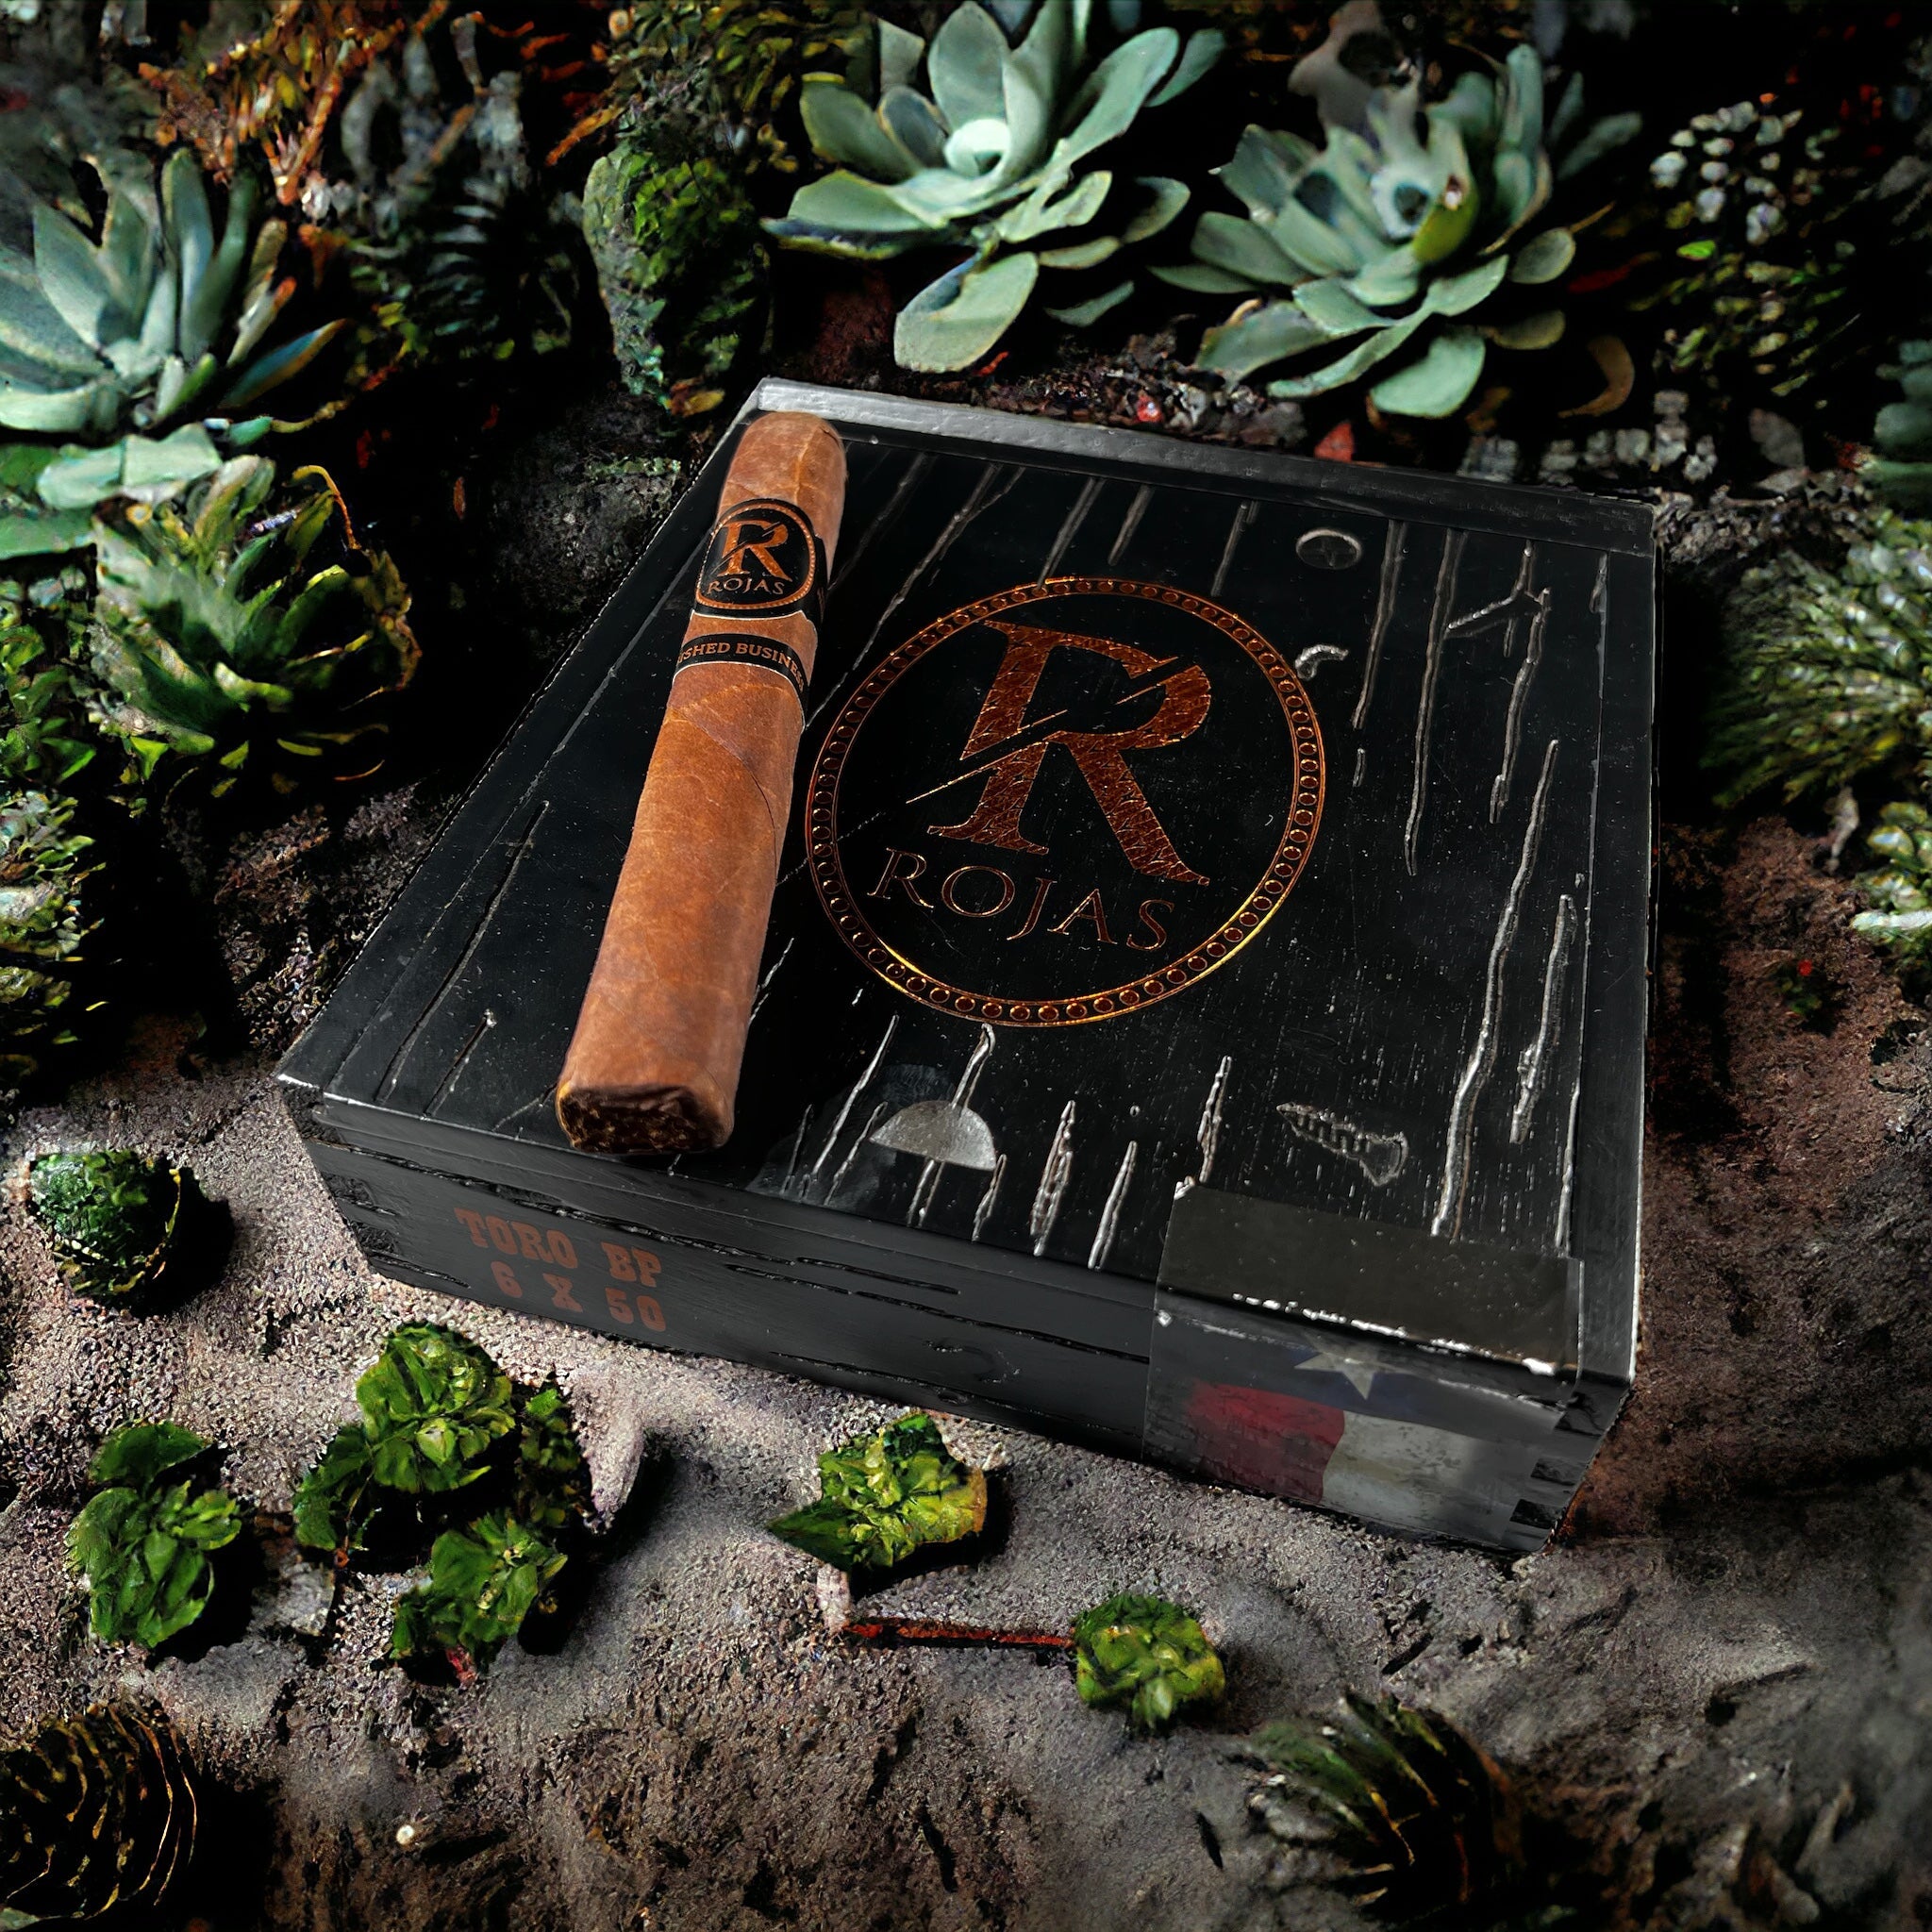 Rojas Unfinished Business Toro - Cigar 30